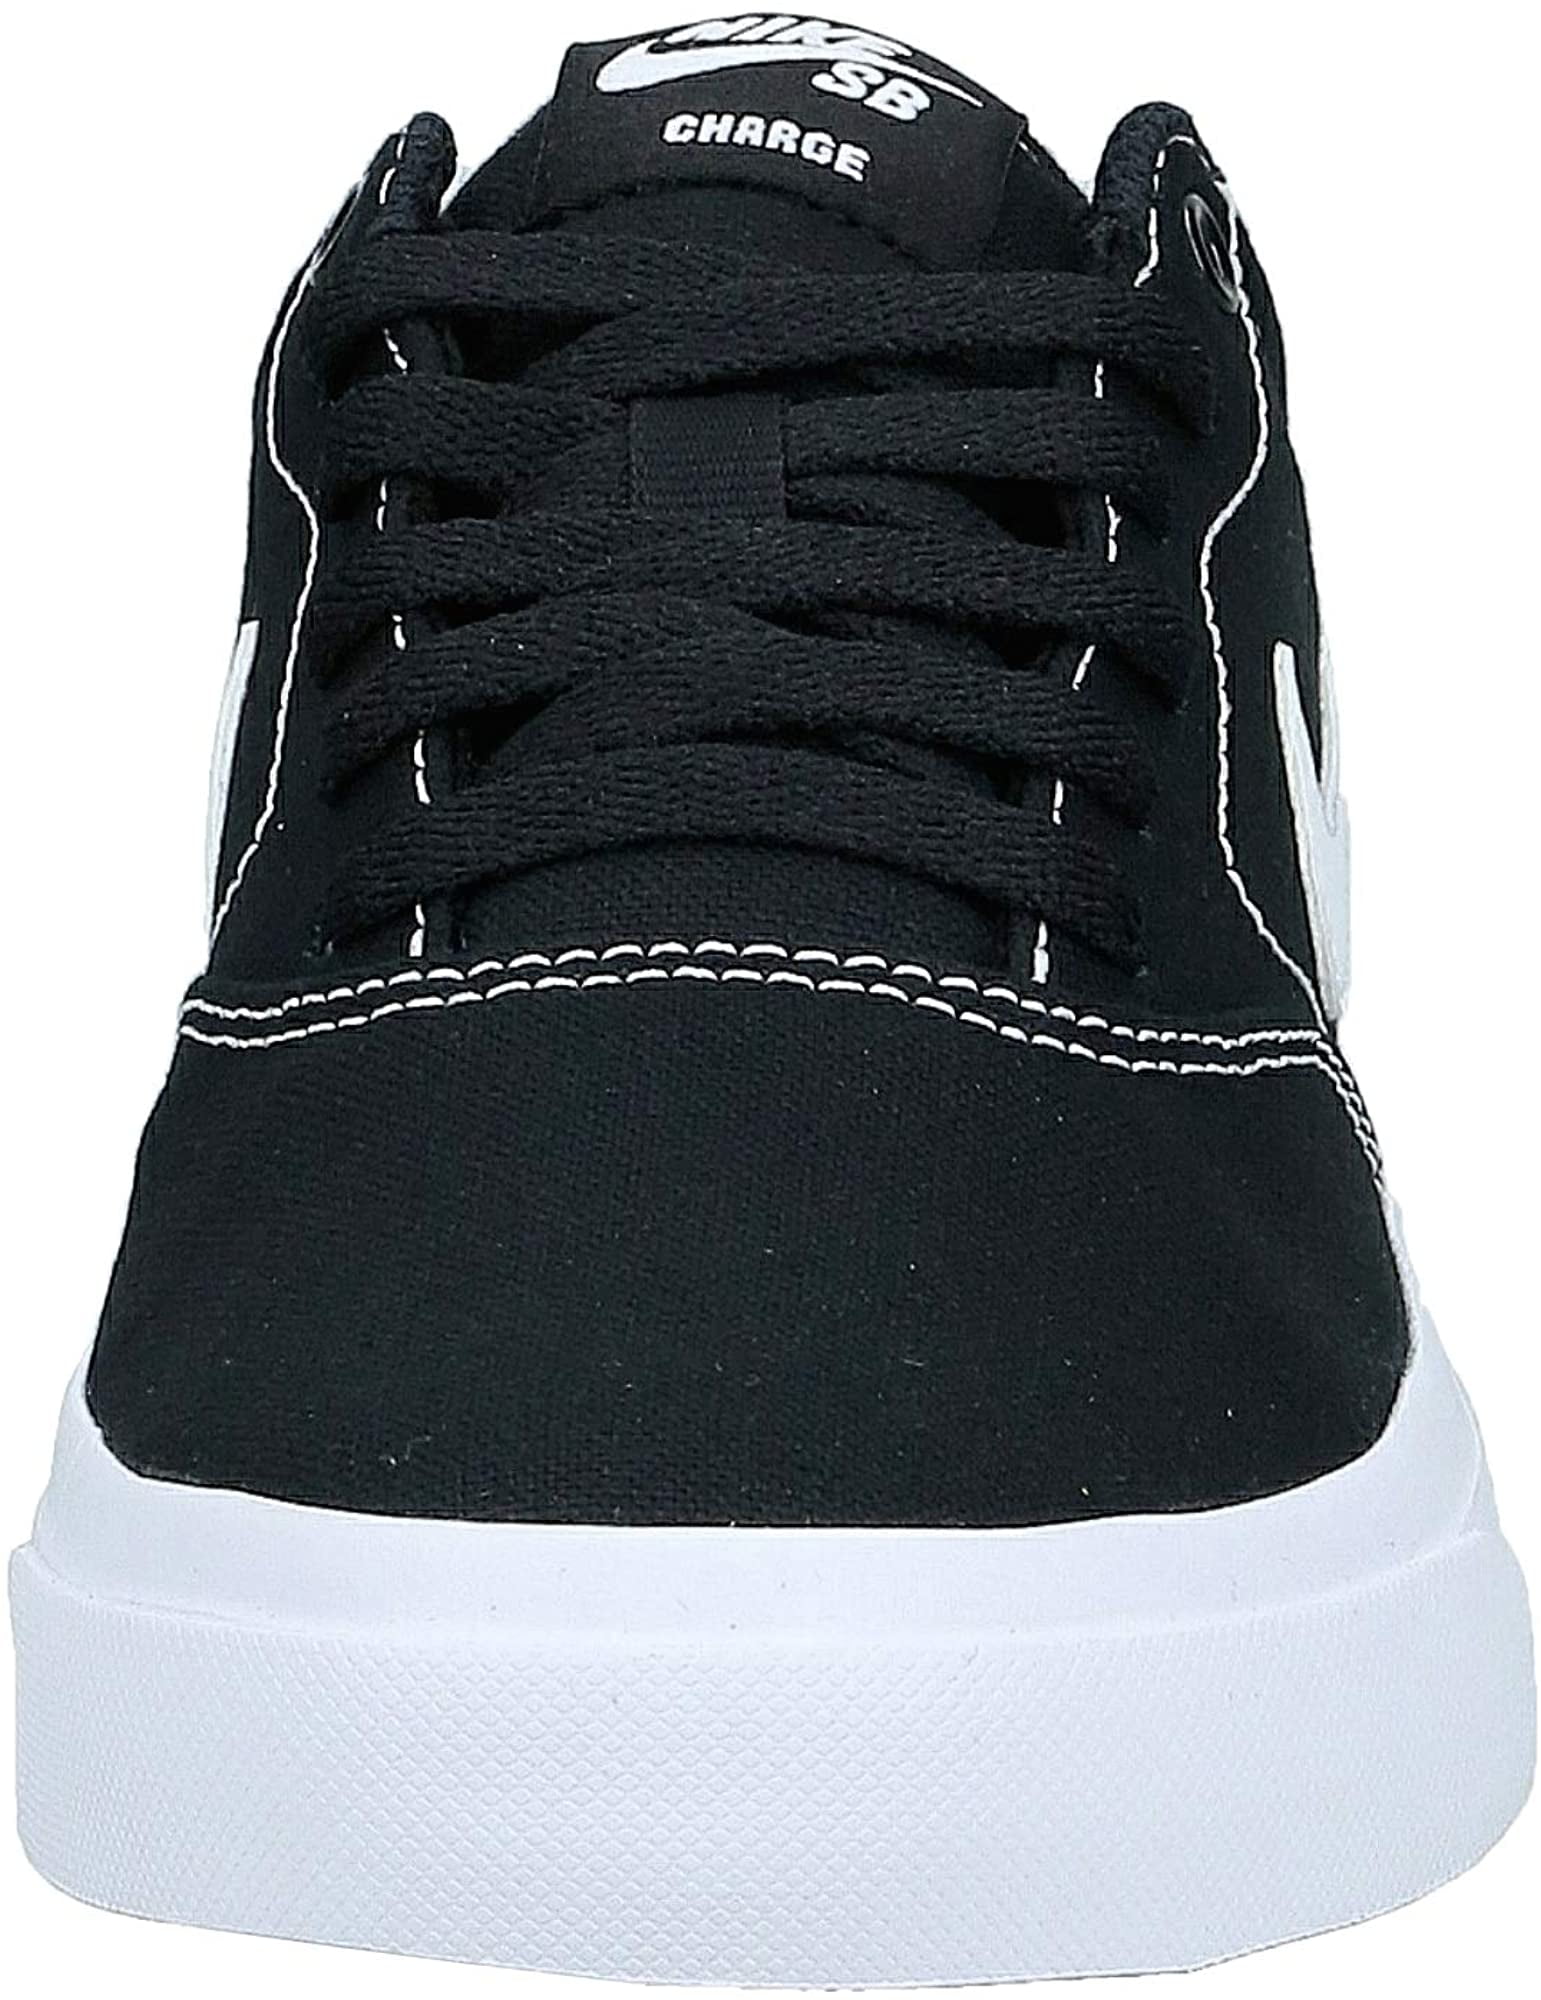 Nike SB Charge Lace Up Canvas Skate Shoes All Black Cushion Unisex NEW |  eBay